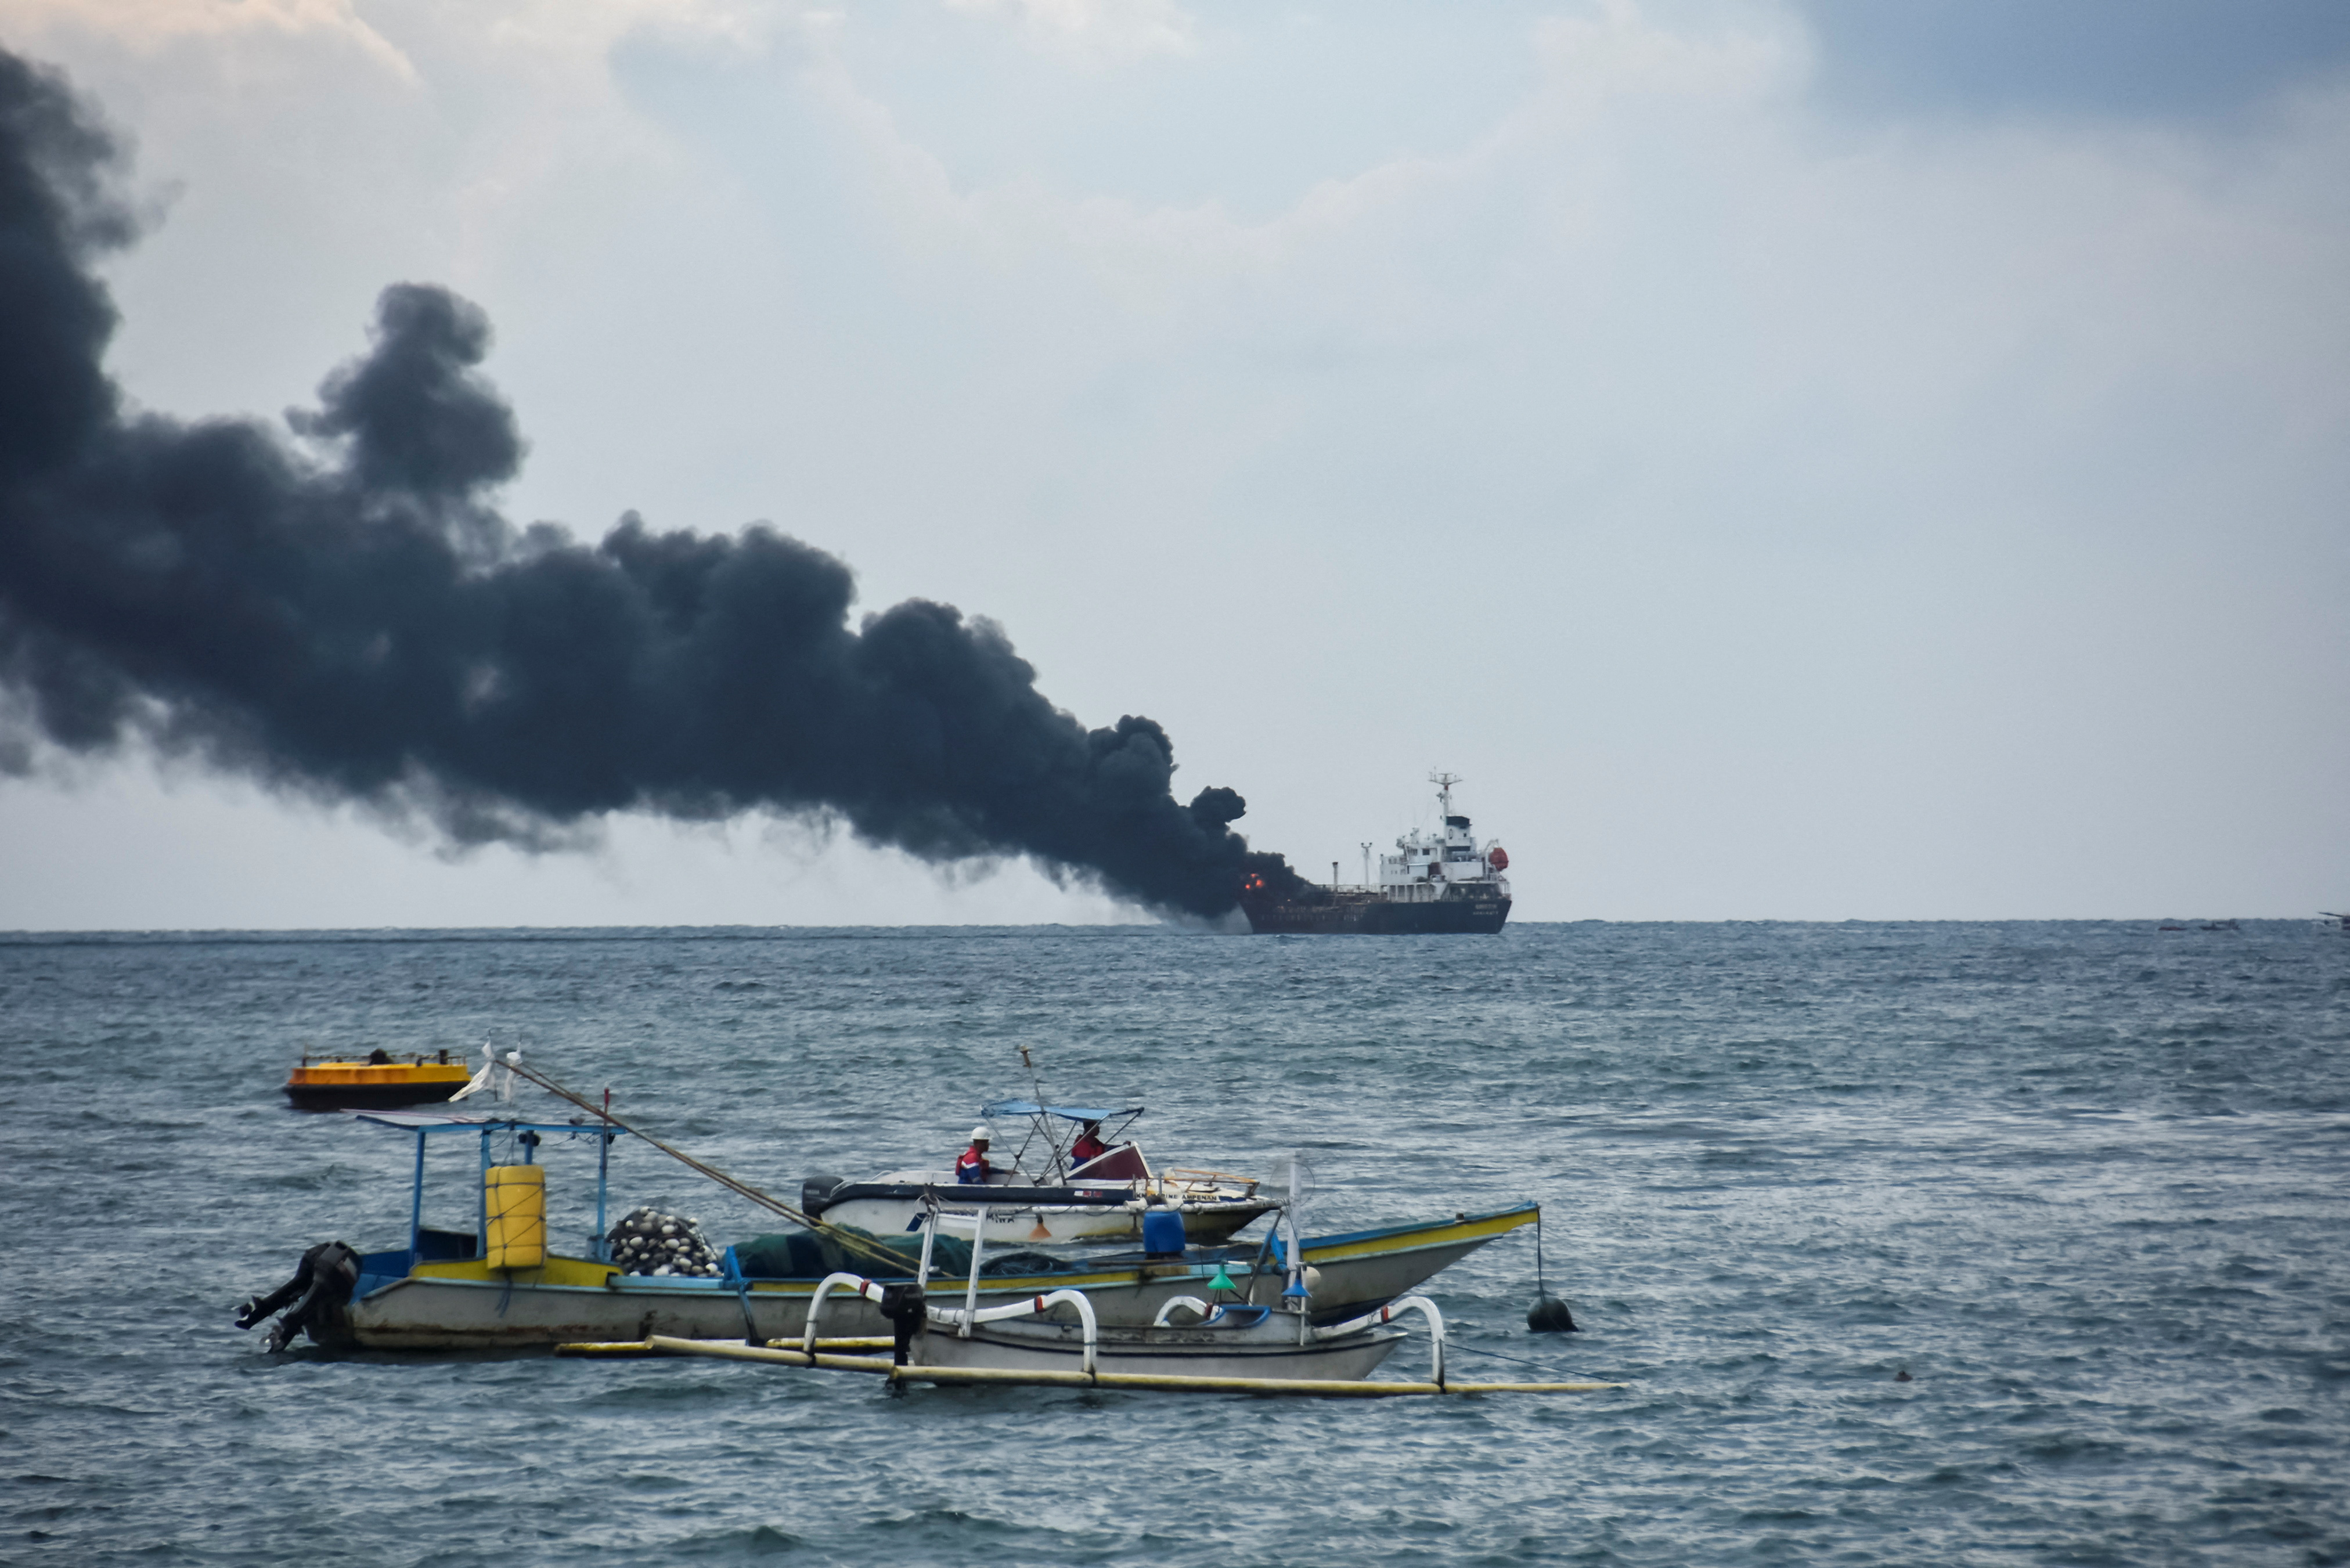 Pertamina tanker, MT Kristin, carrying fuel, catches fire on the coast of Mataram